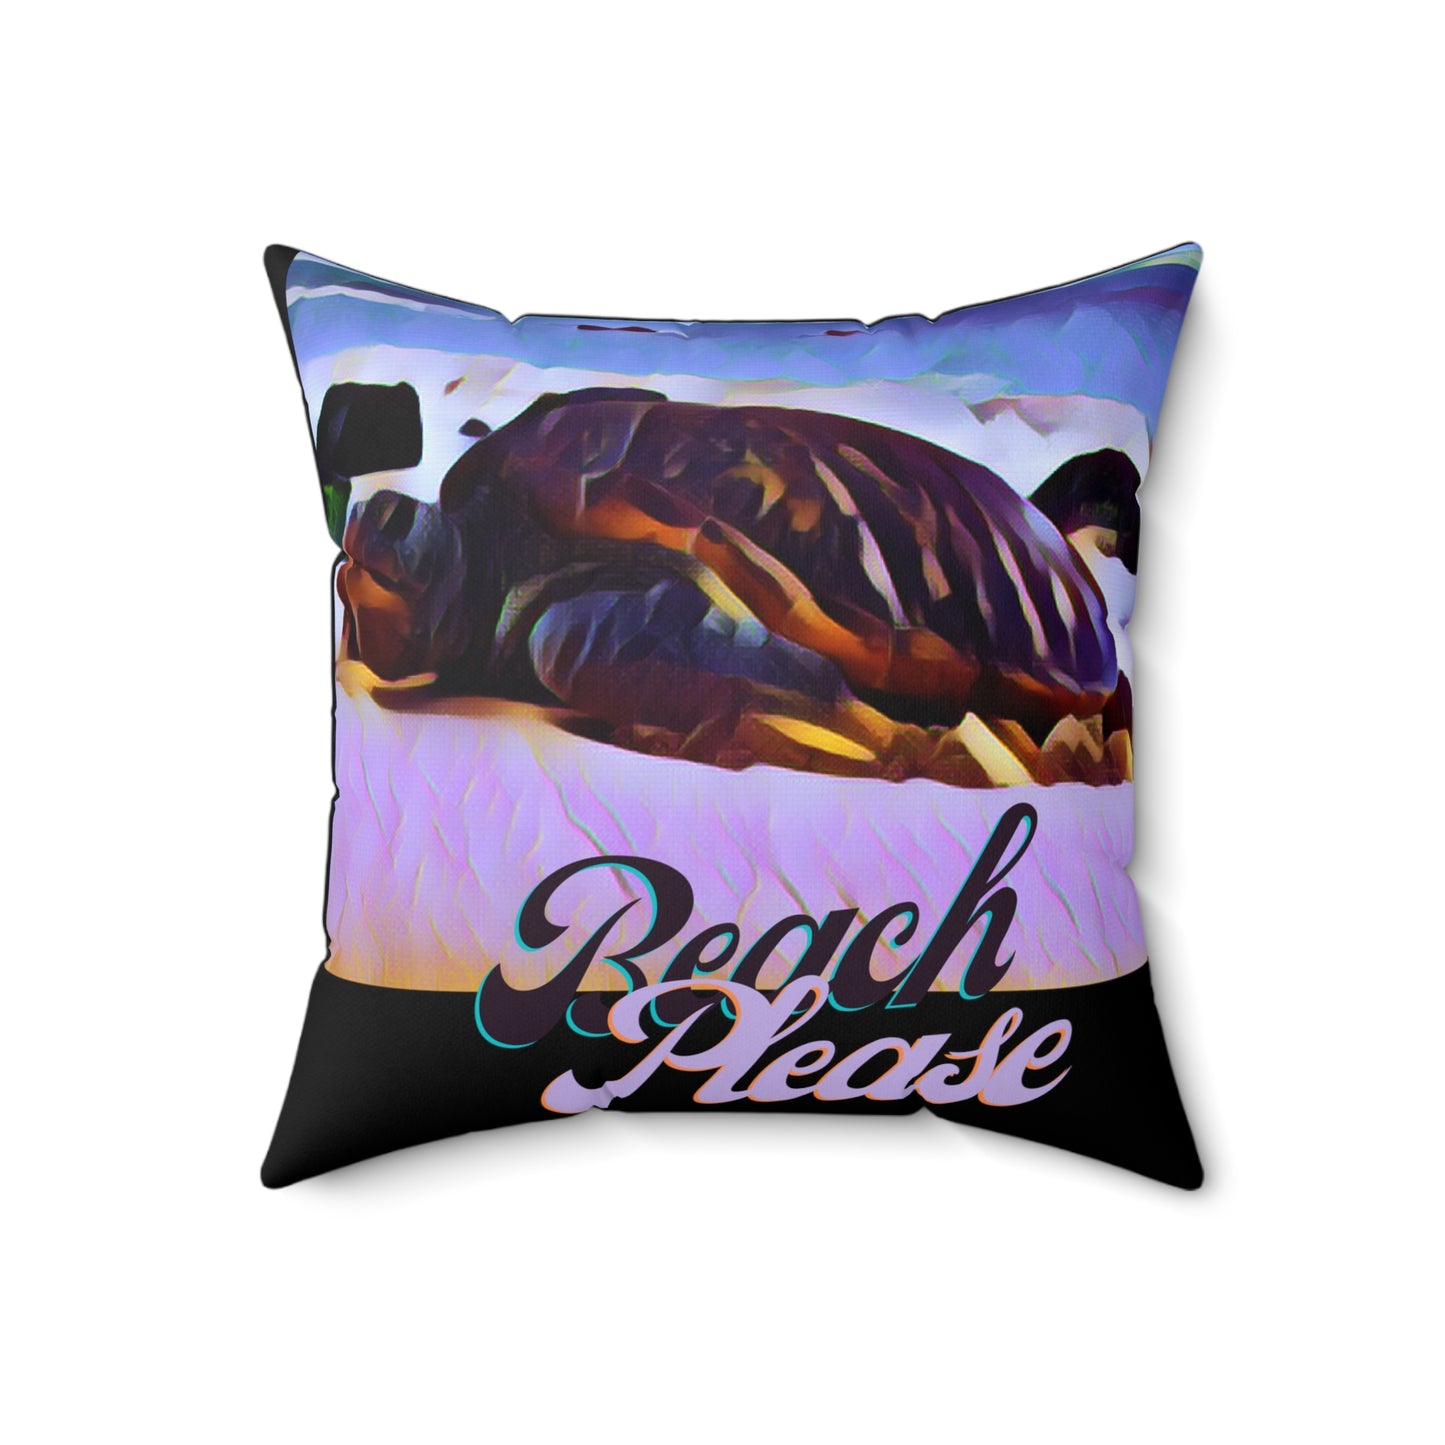 Beach Please Spun Polyester Square Pillow